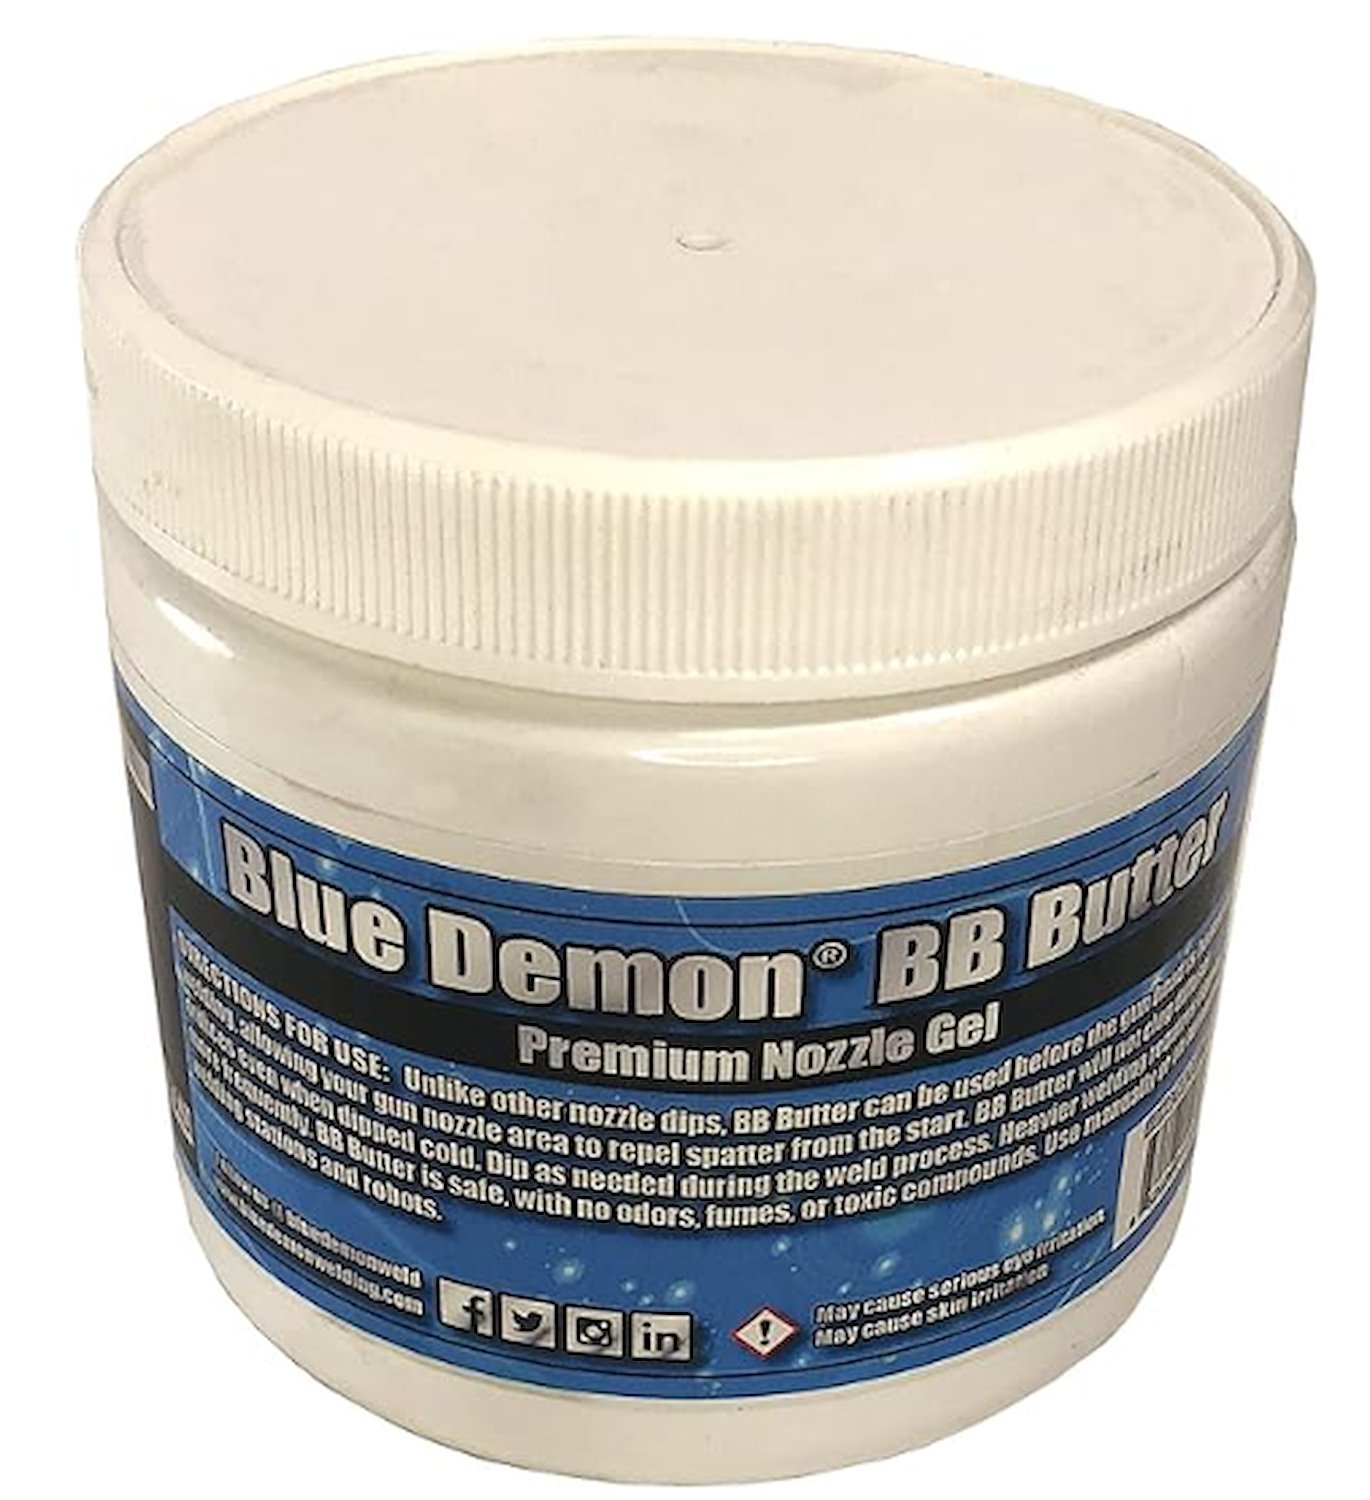 BDNG-BB-BUTTER Premium BB Butter MIG Welder Nozzle Gel [16 oz.]